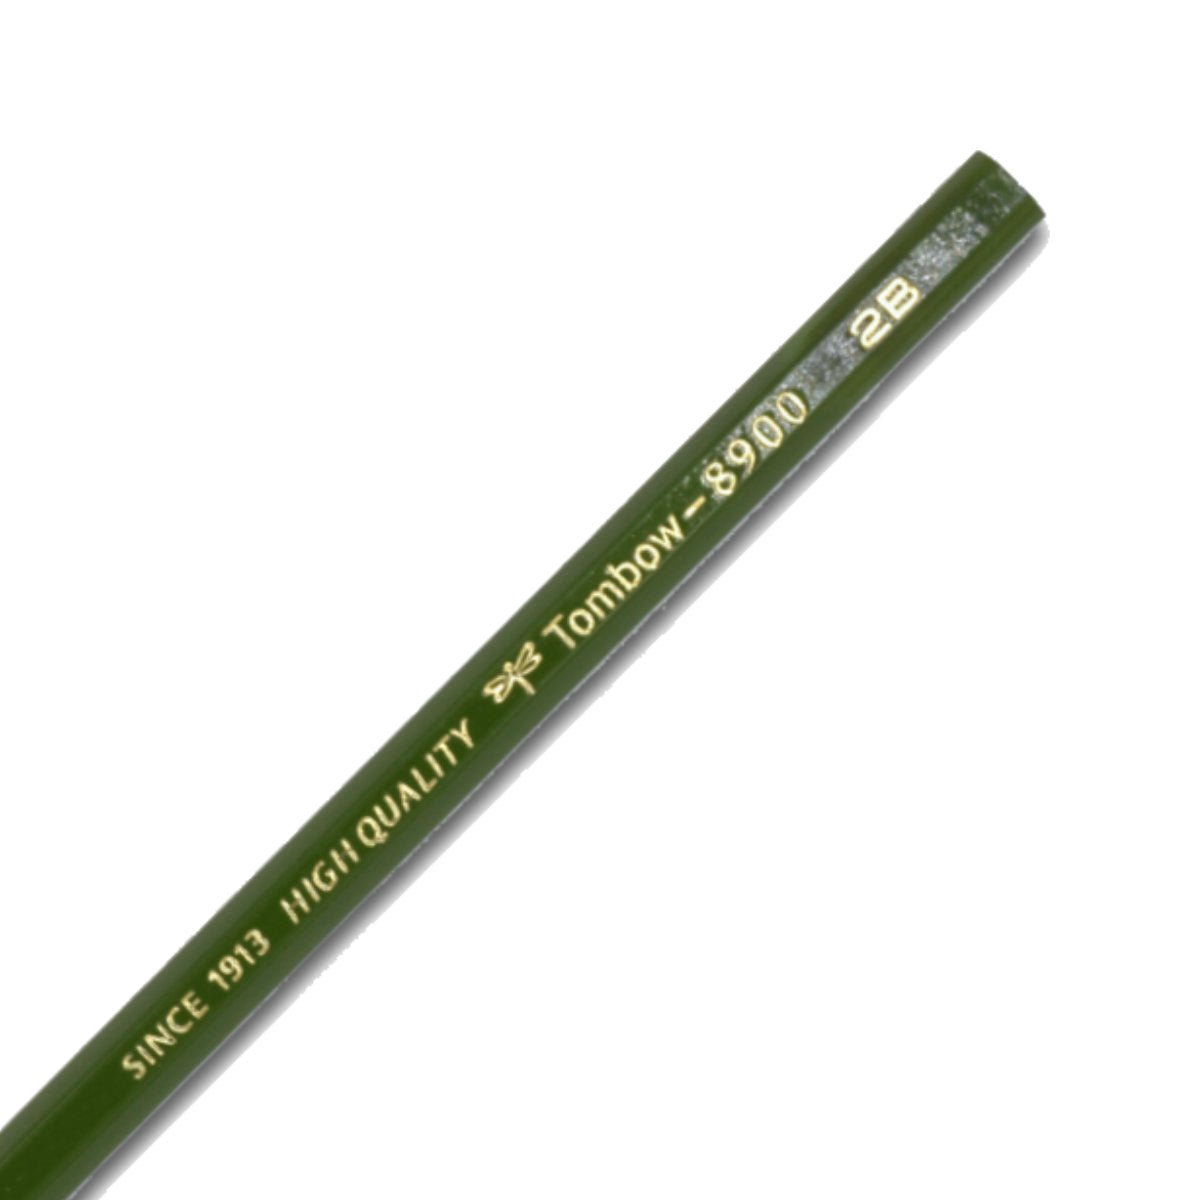 Tombow 8900 Single Pencil - 2B - Notegeist